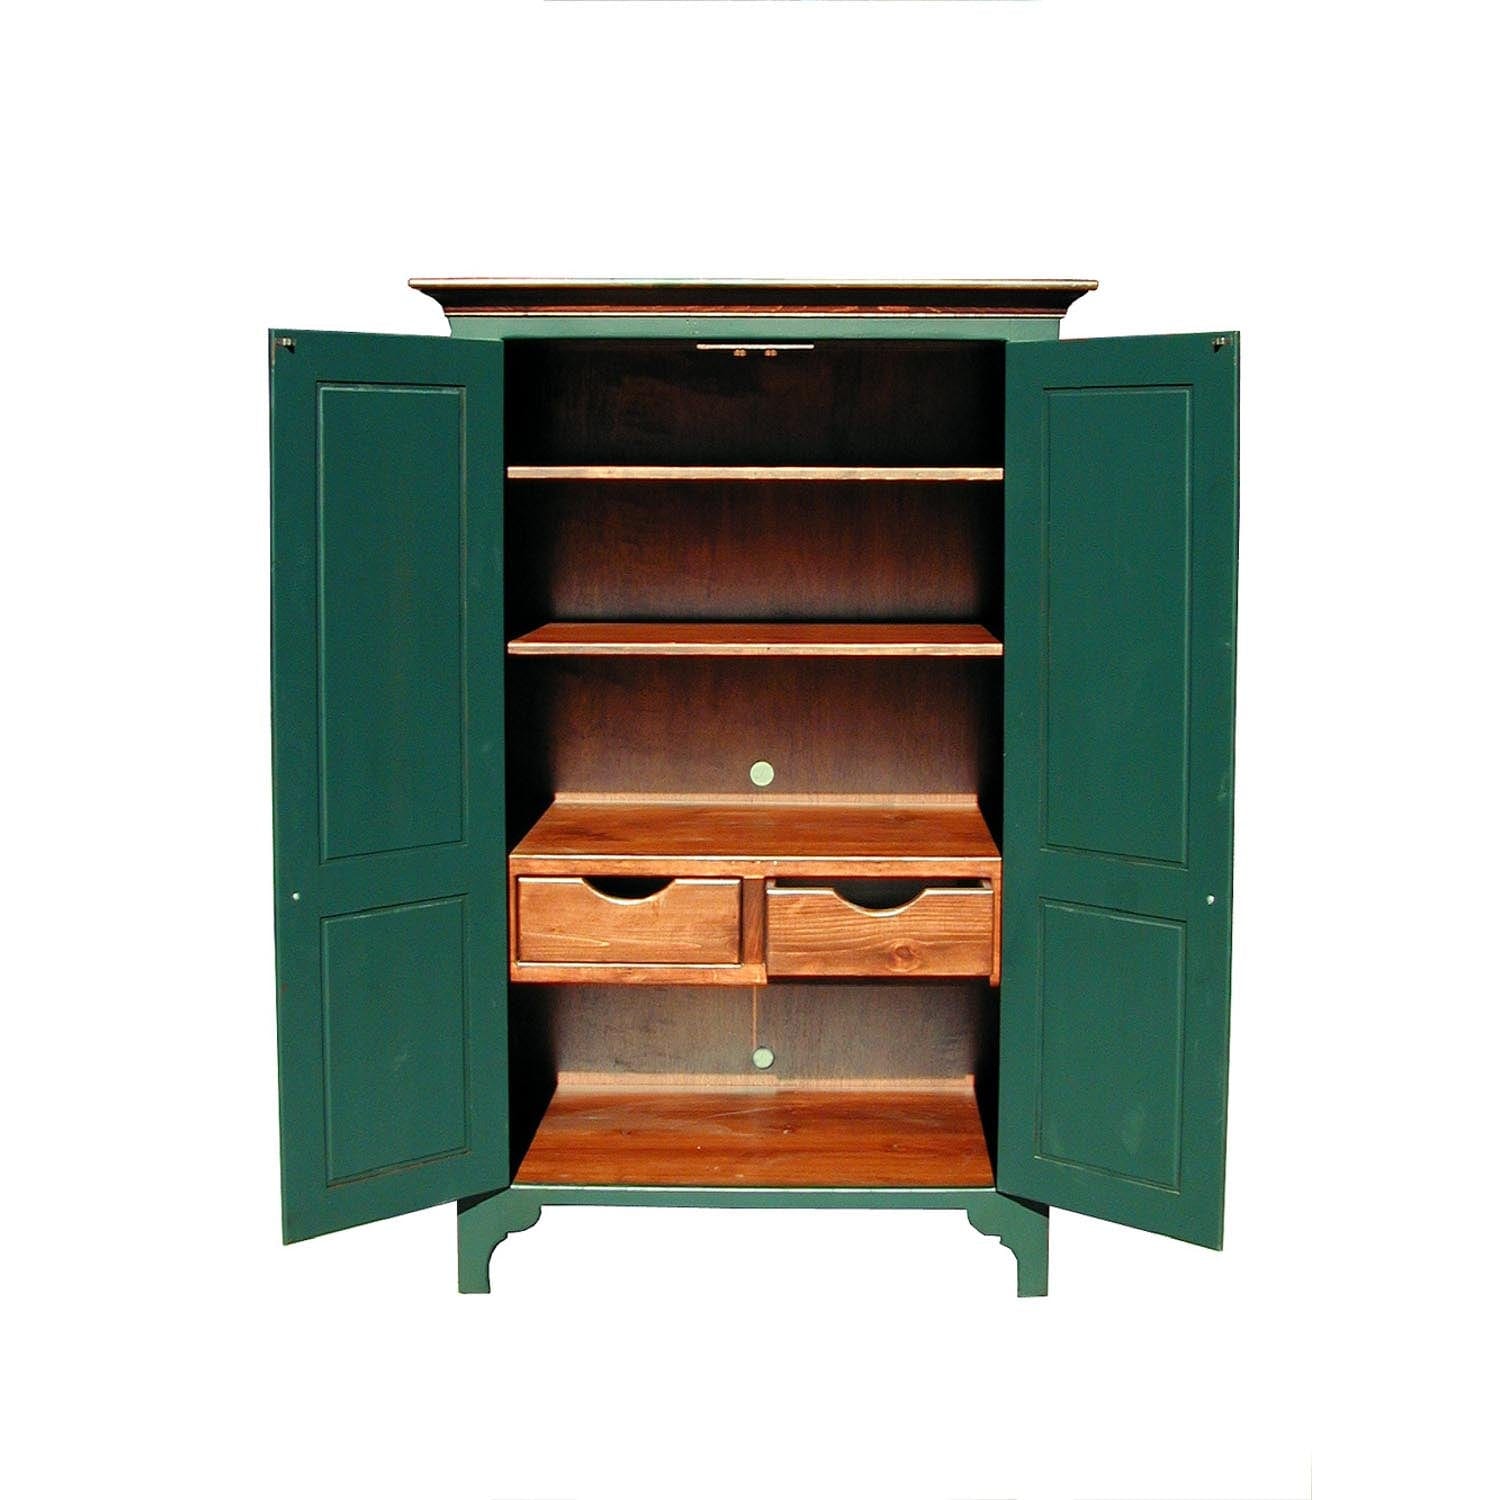 2-Daydesign Cabinet Southern Splinter Elegant Premium Quality River Cabinet in Green - 3626